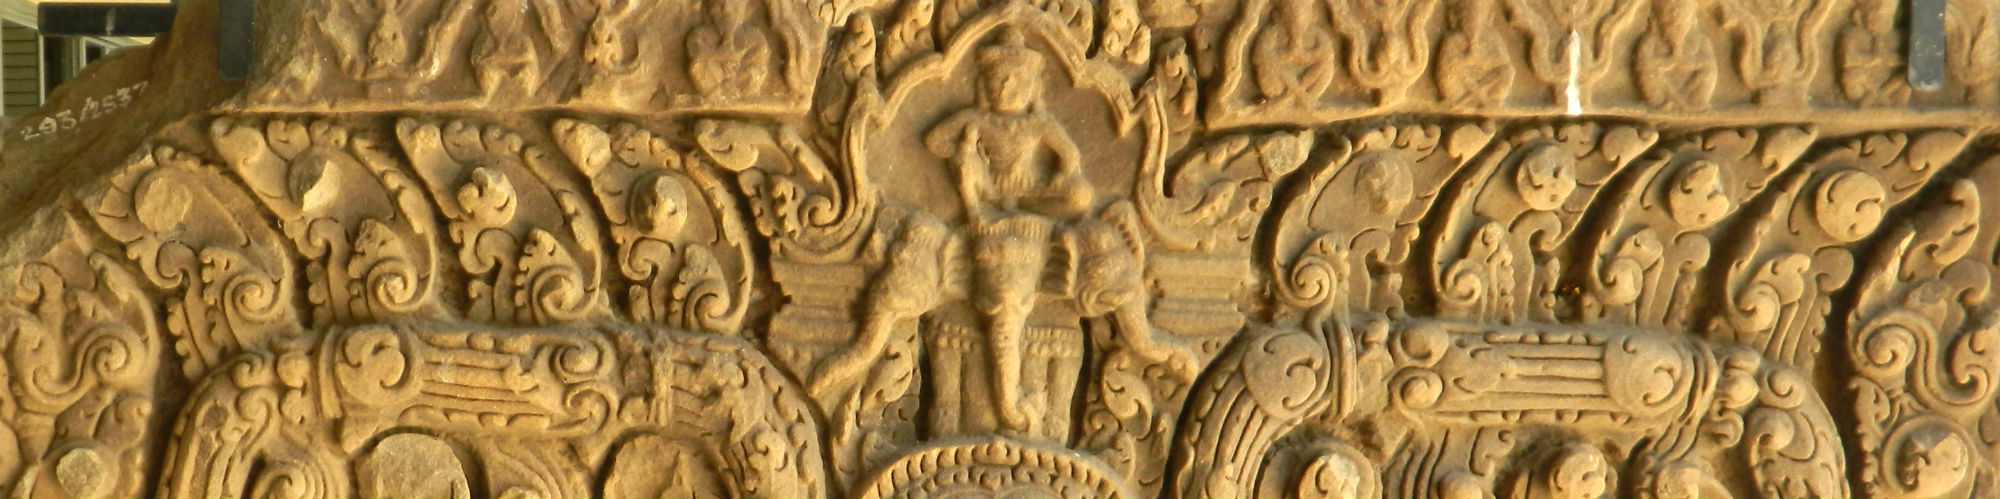 Carved lintel from the Khmer Era, Prachinburi National Museum, Prachinburi